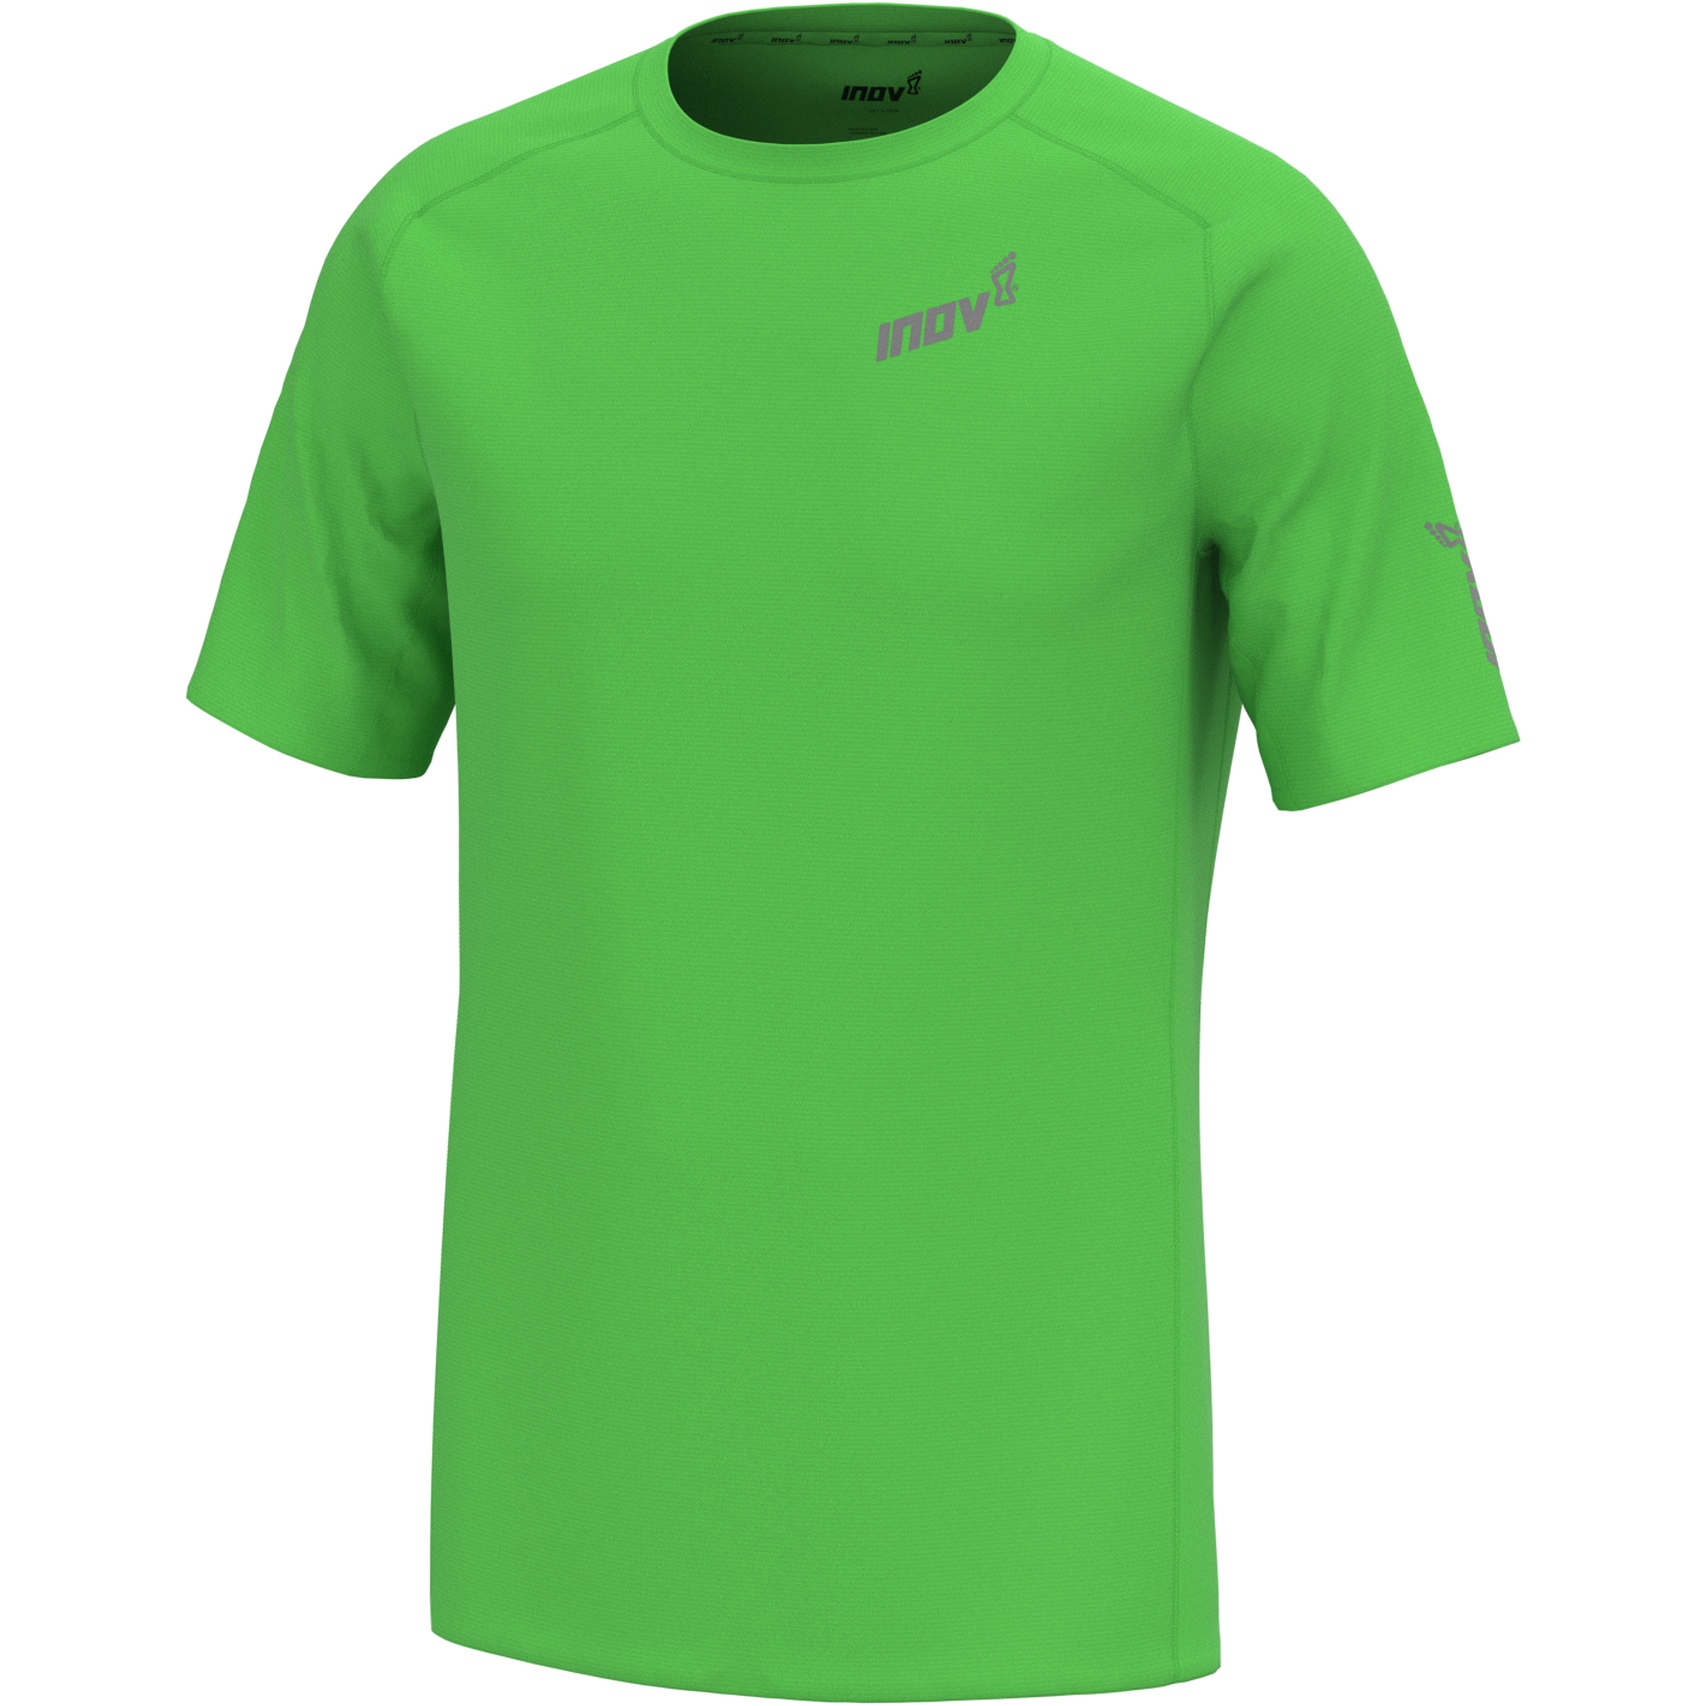 Foto de Inov-8 Base Elite Camiseta Running - verde